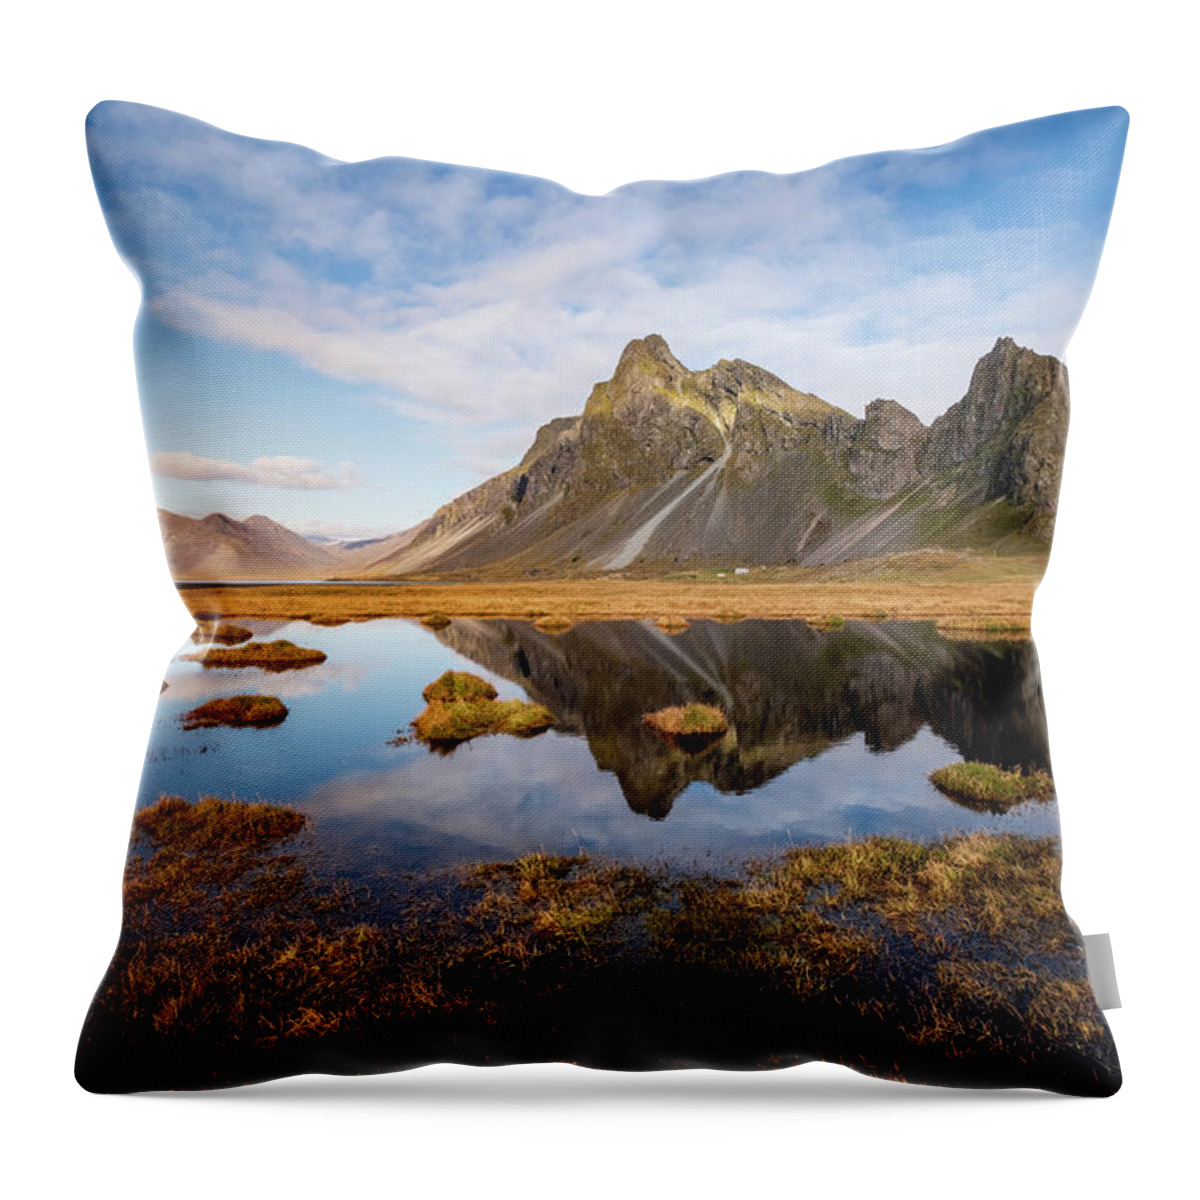 Eystrahorn Throw Pillow featuring the photograph Reflection of Eystrahorn mountain in Iceland by Alexios Ntounas